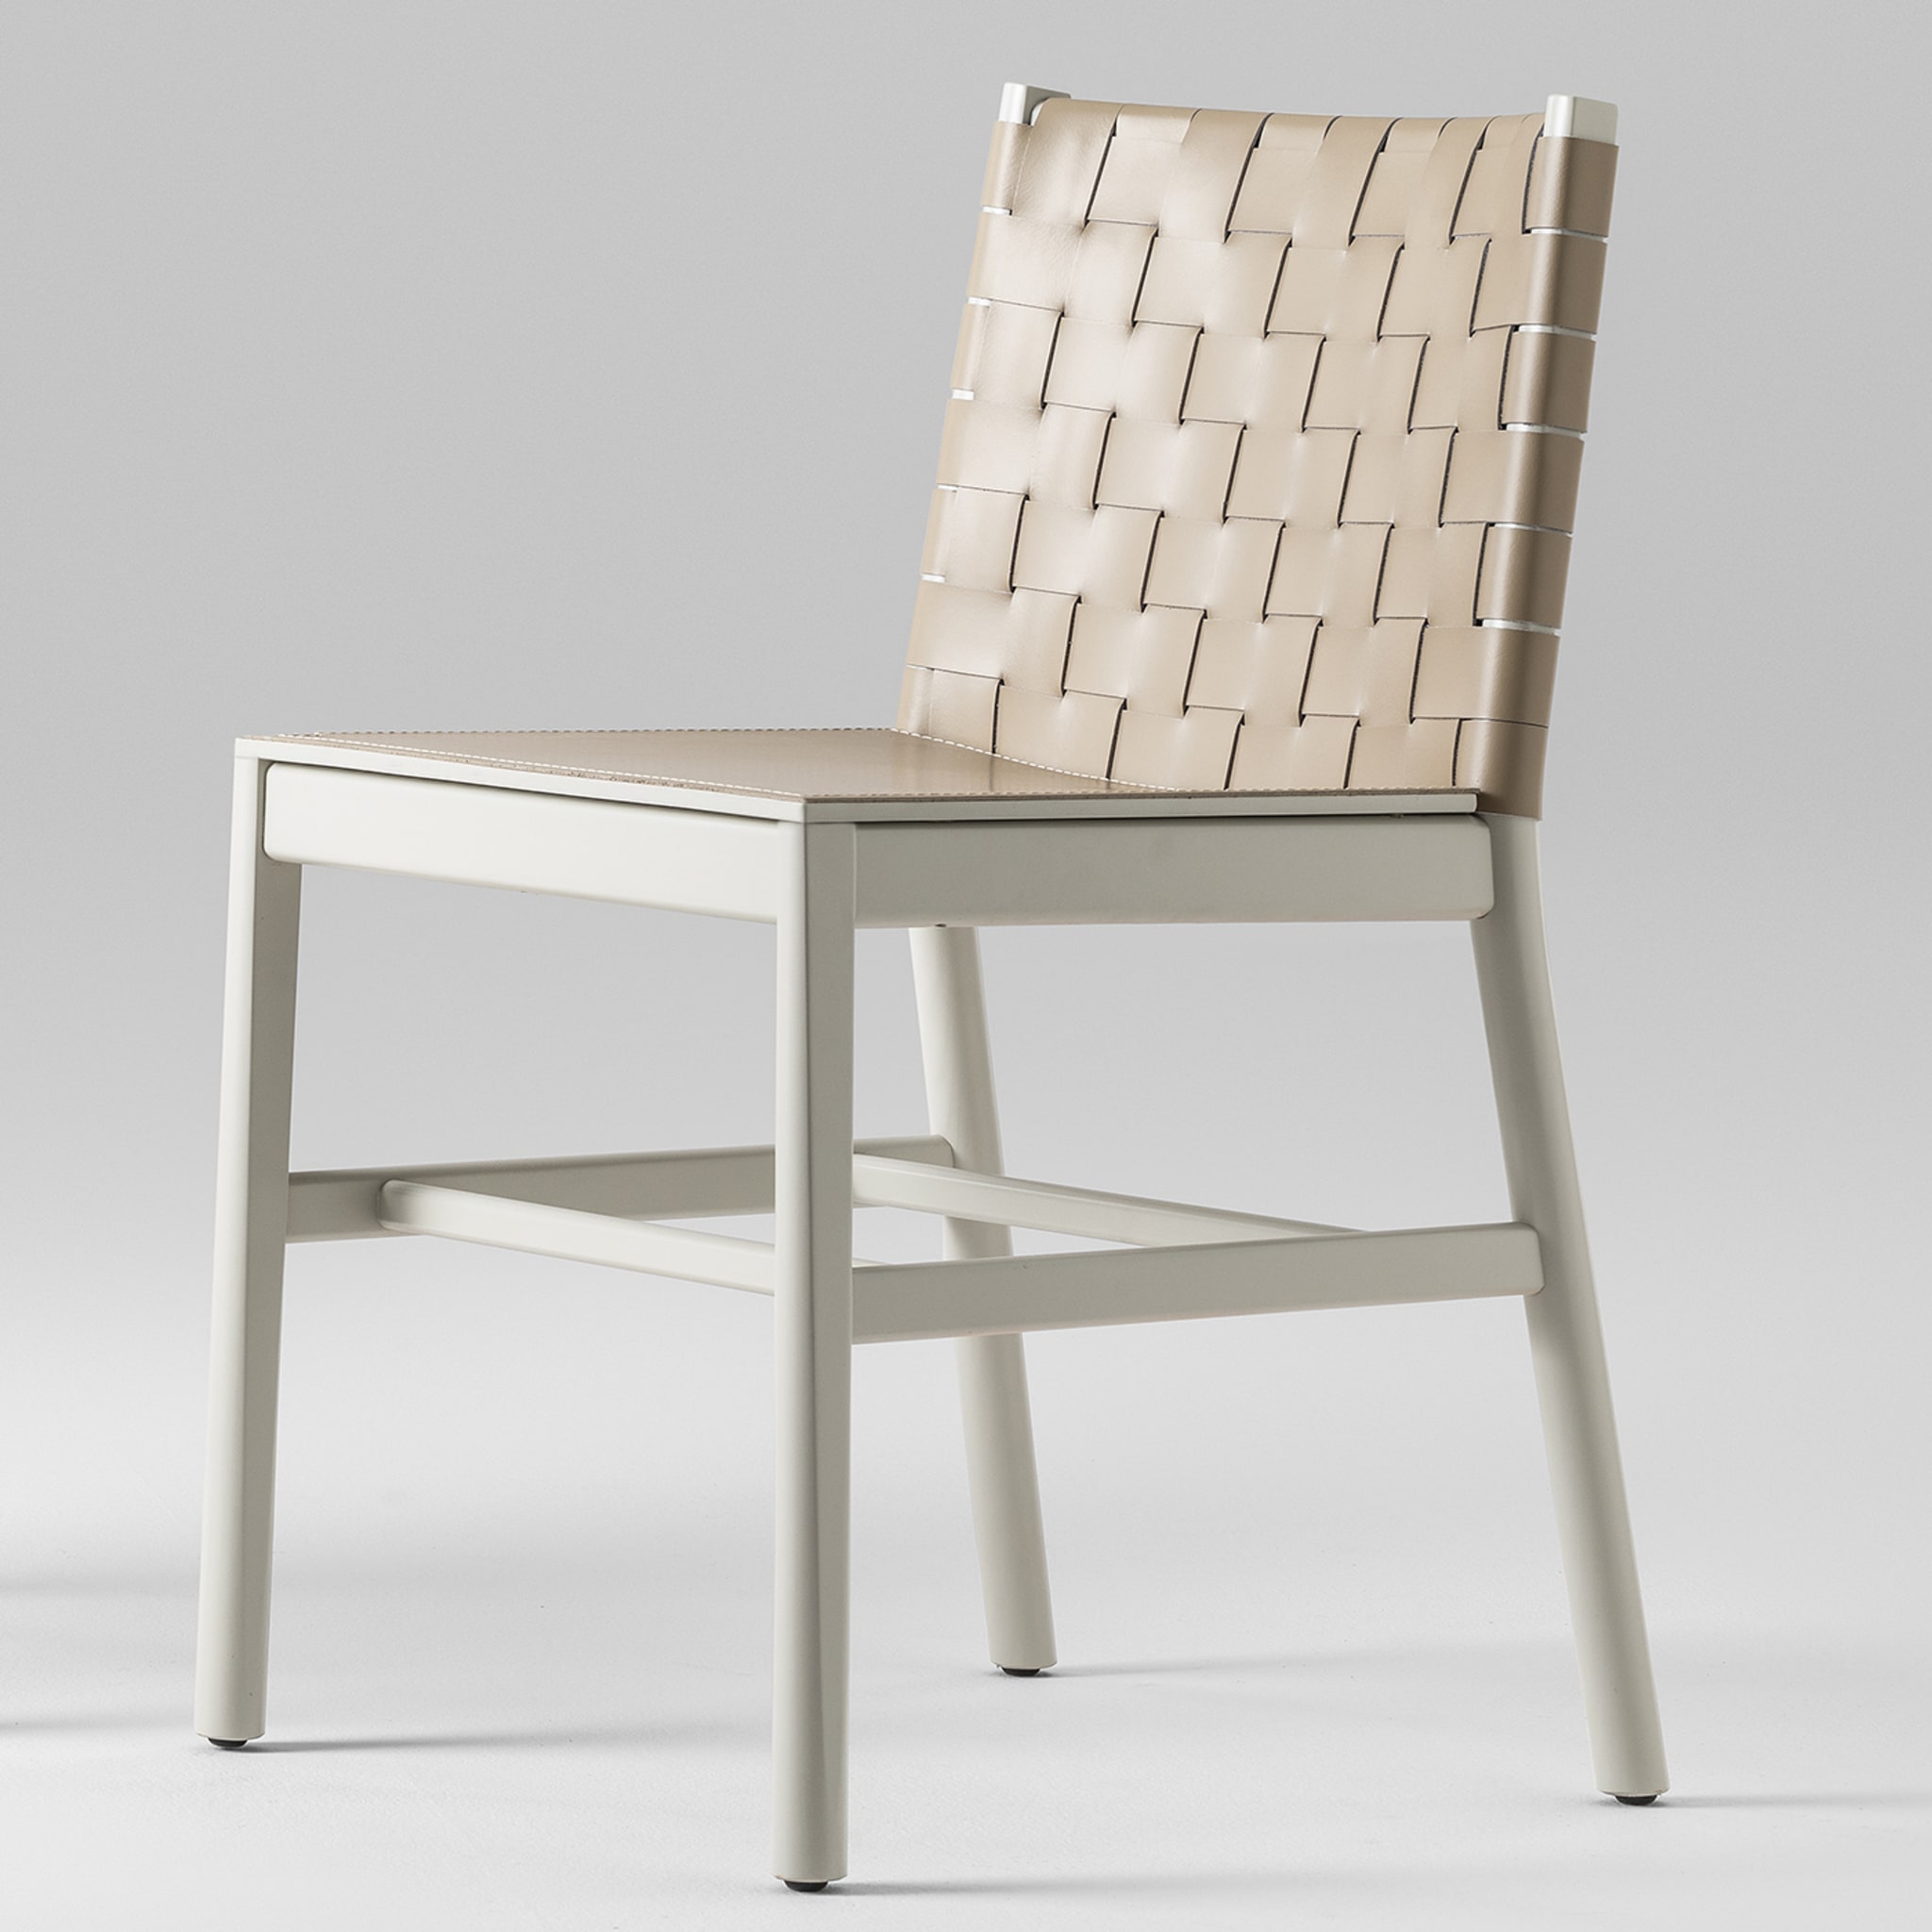 Julie Leather Chair #1 by Emilio Nanni - Alternative view 1